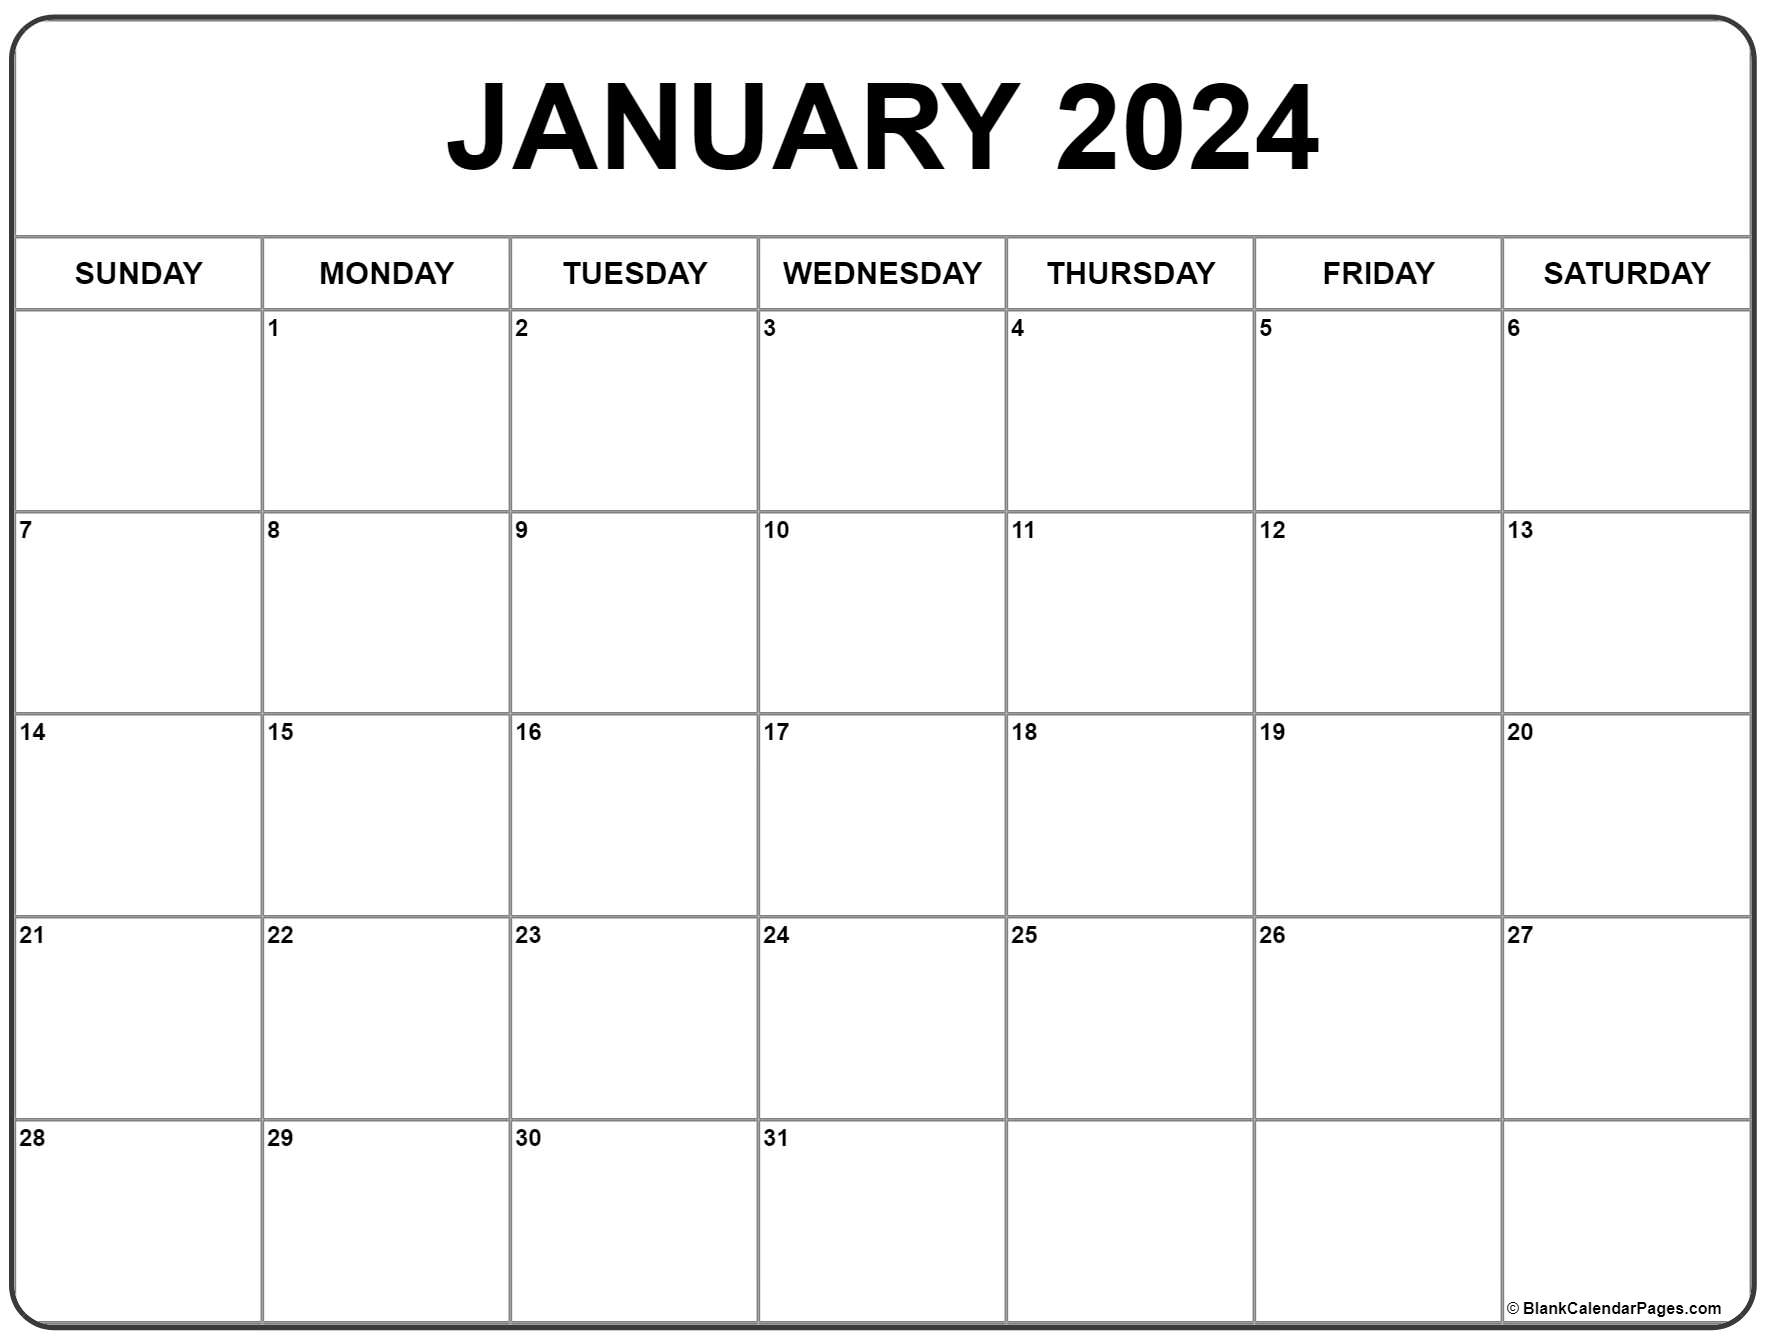 January 2024 Calendar | Free Printable Calendar | Free Printable Calendar 2024 January